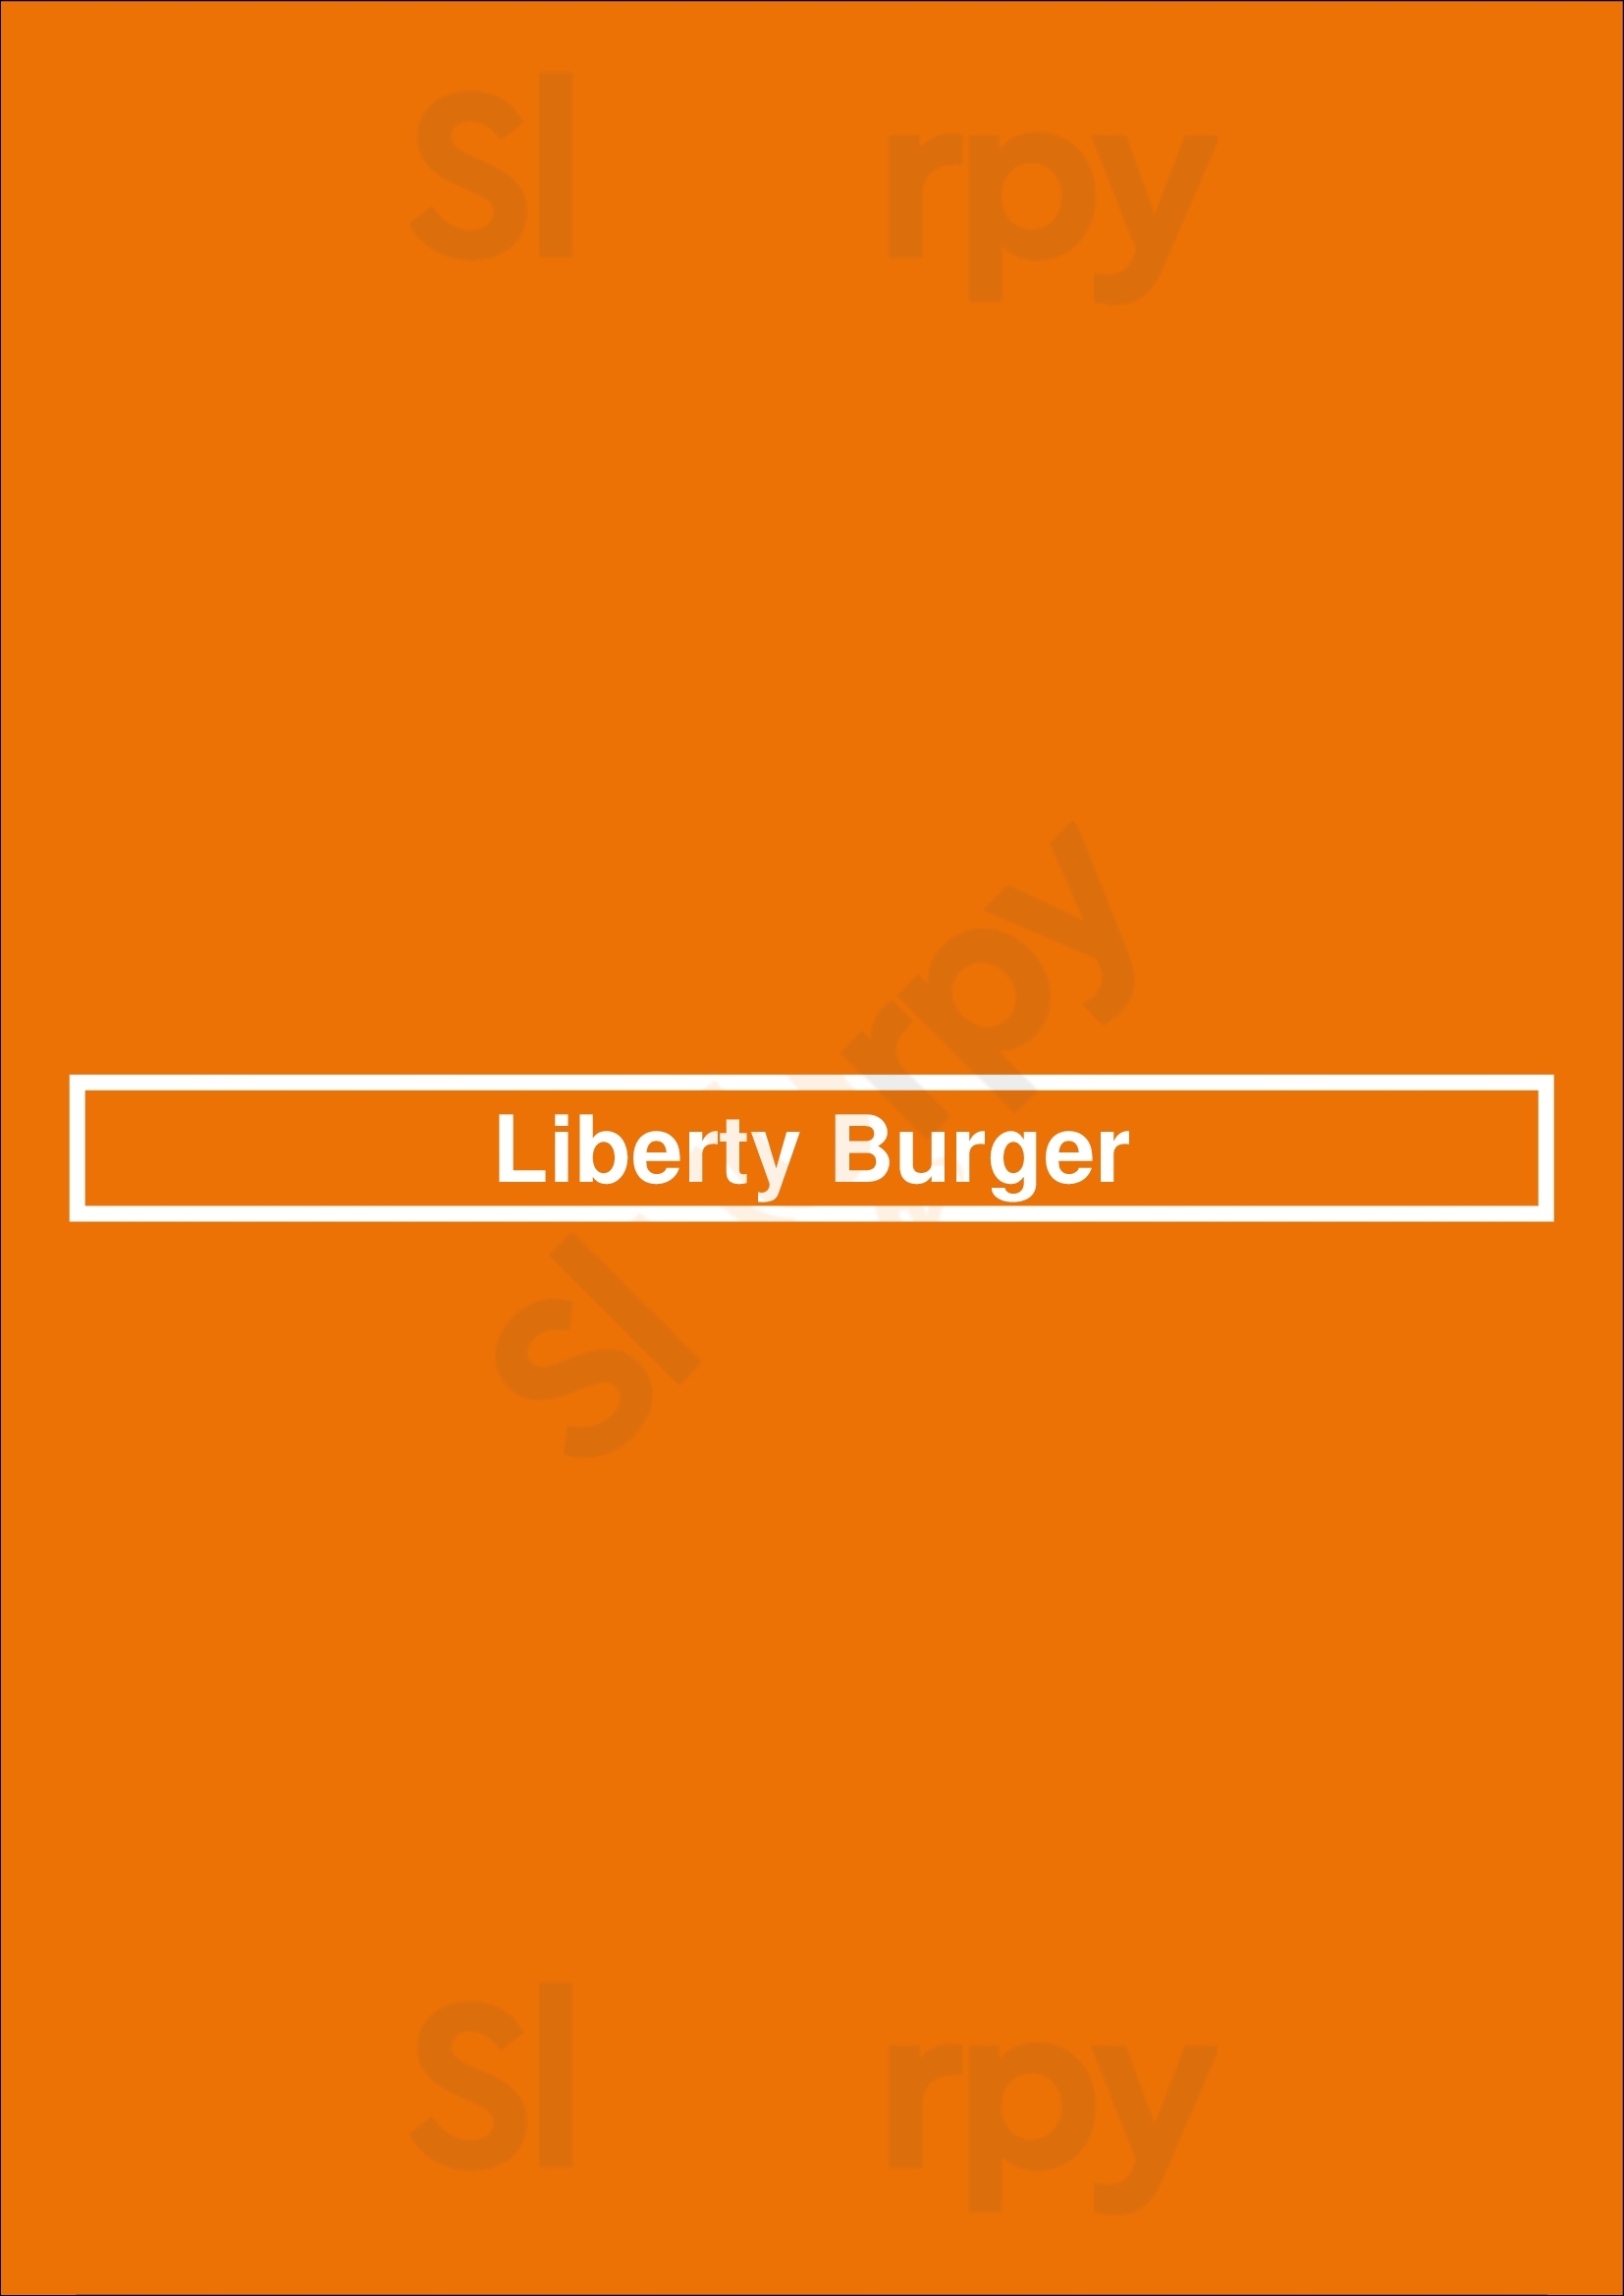 Liberty Burger Dallas Menu - 1